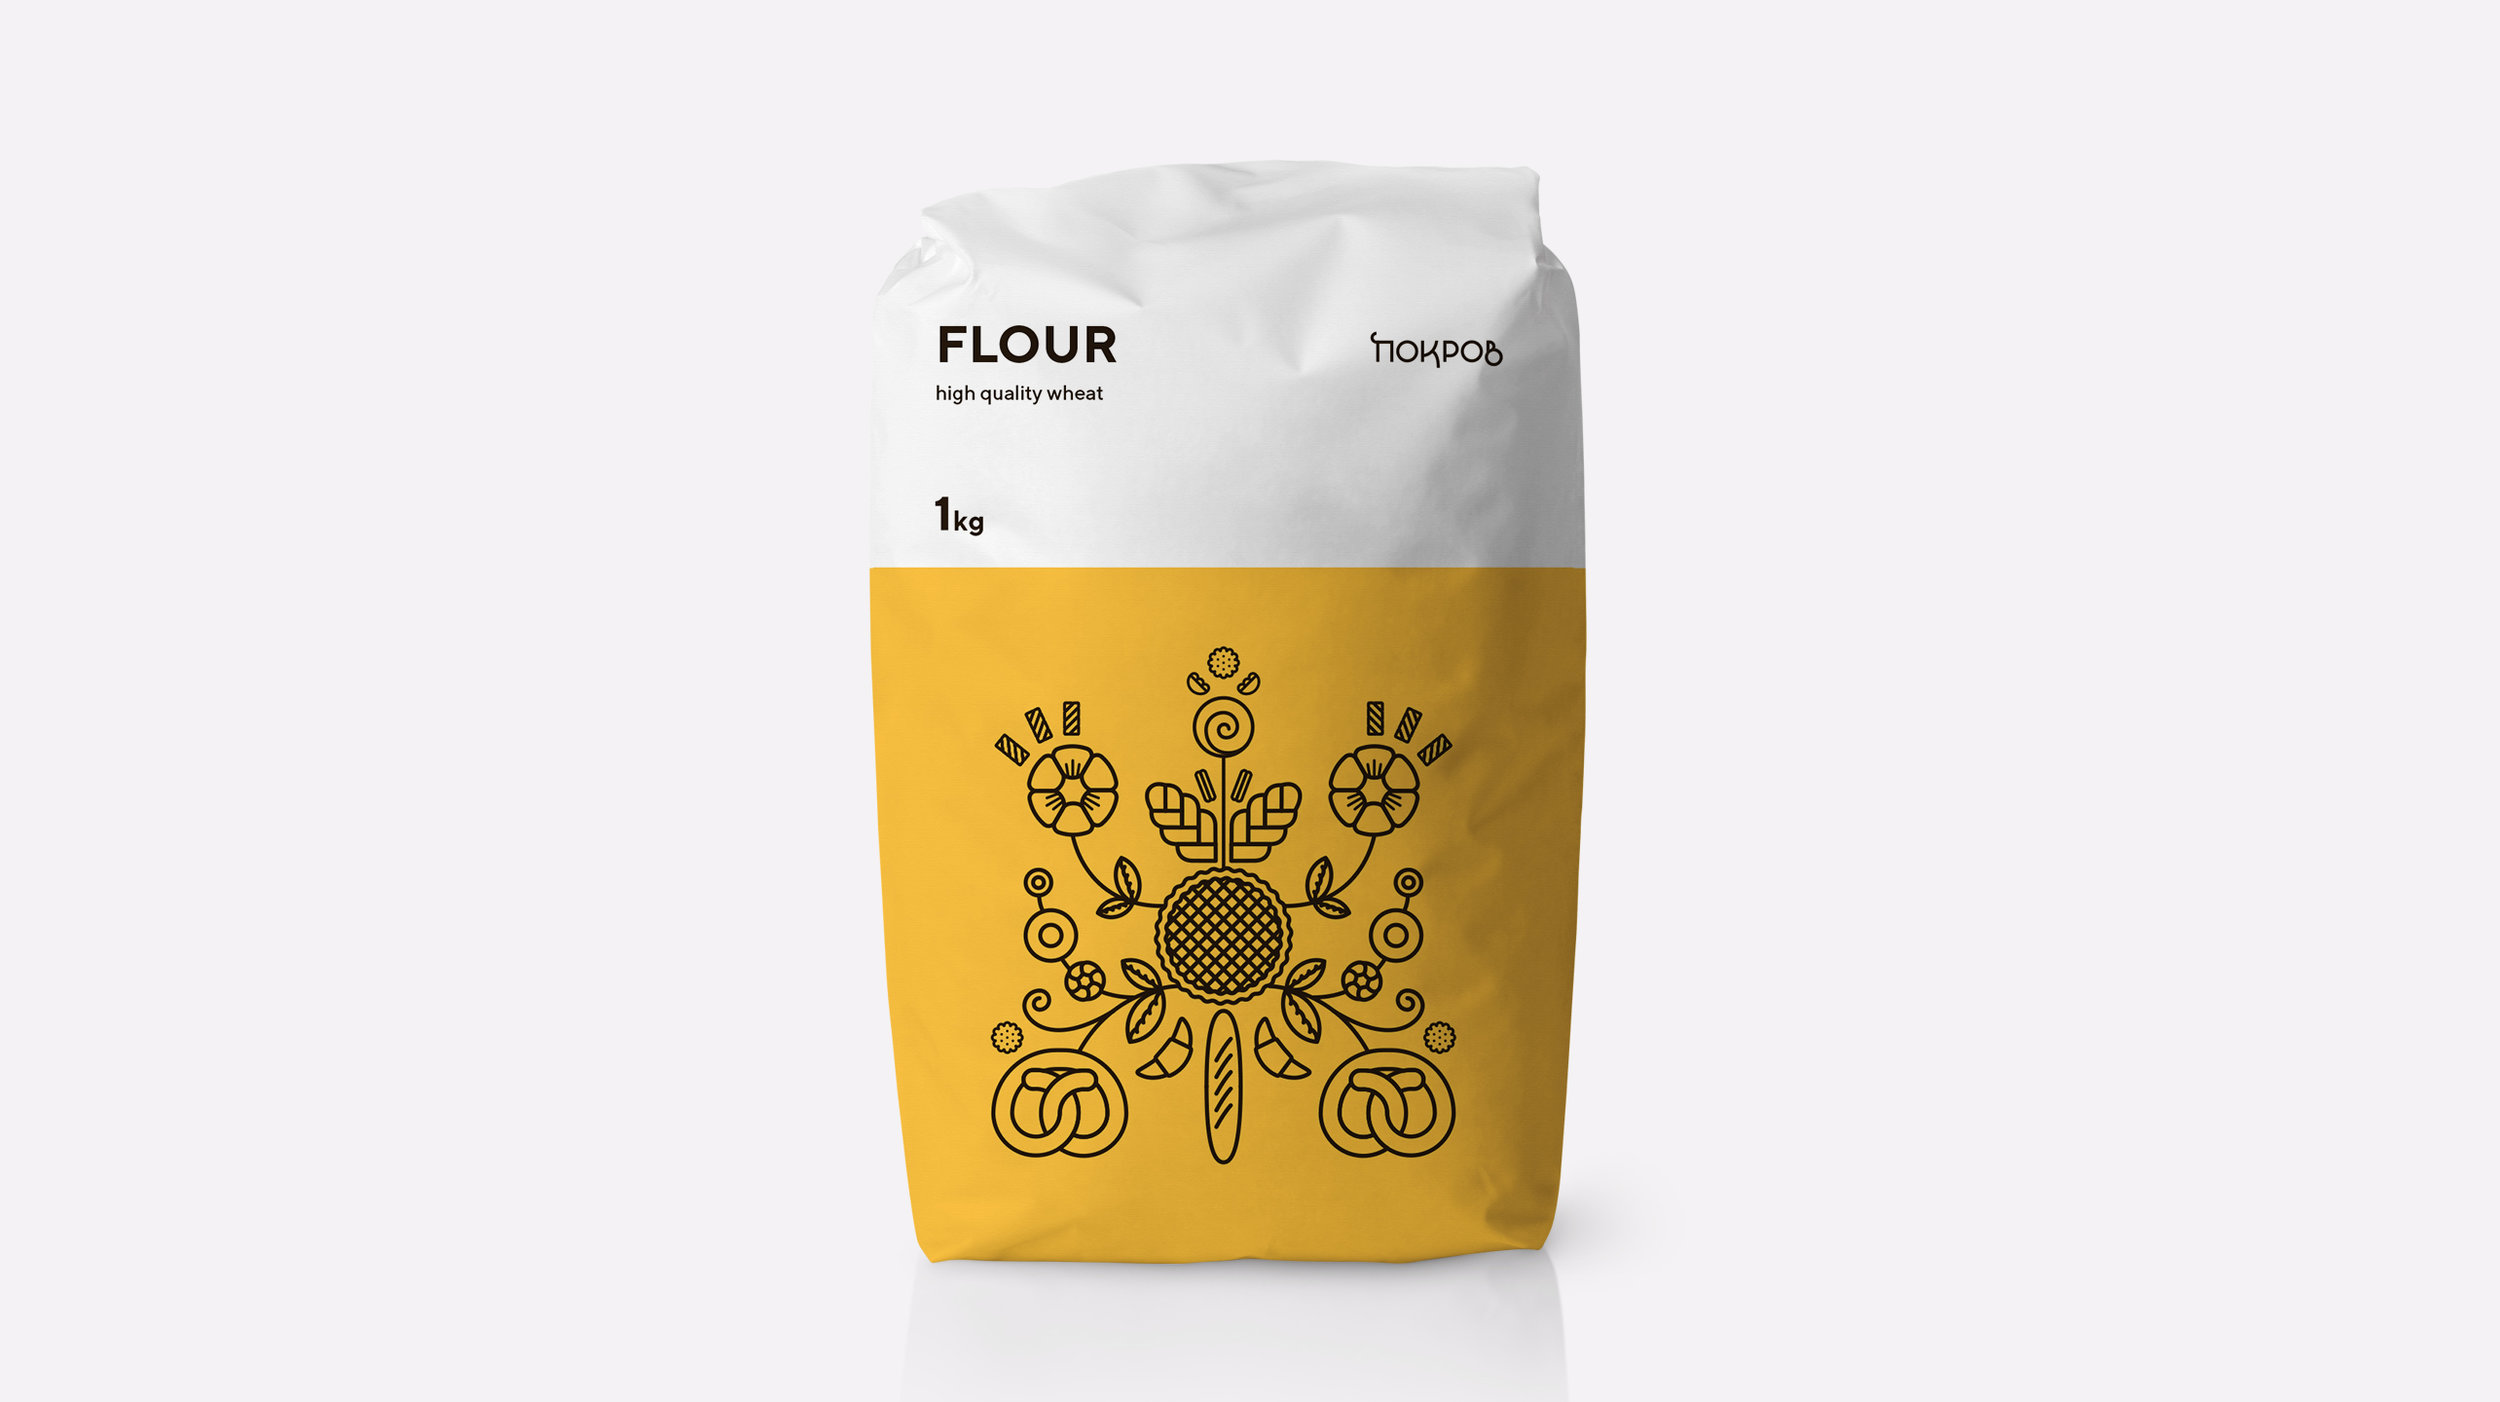 Traditionally Modern and Beautiful Ukrainian Flour Packaging Design